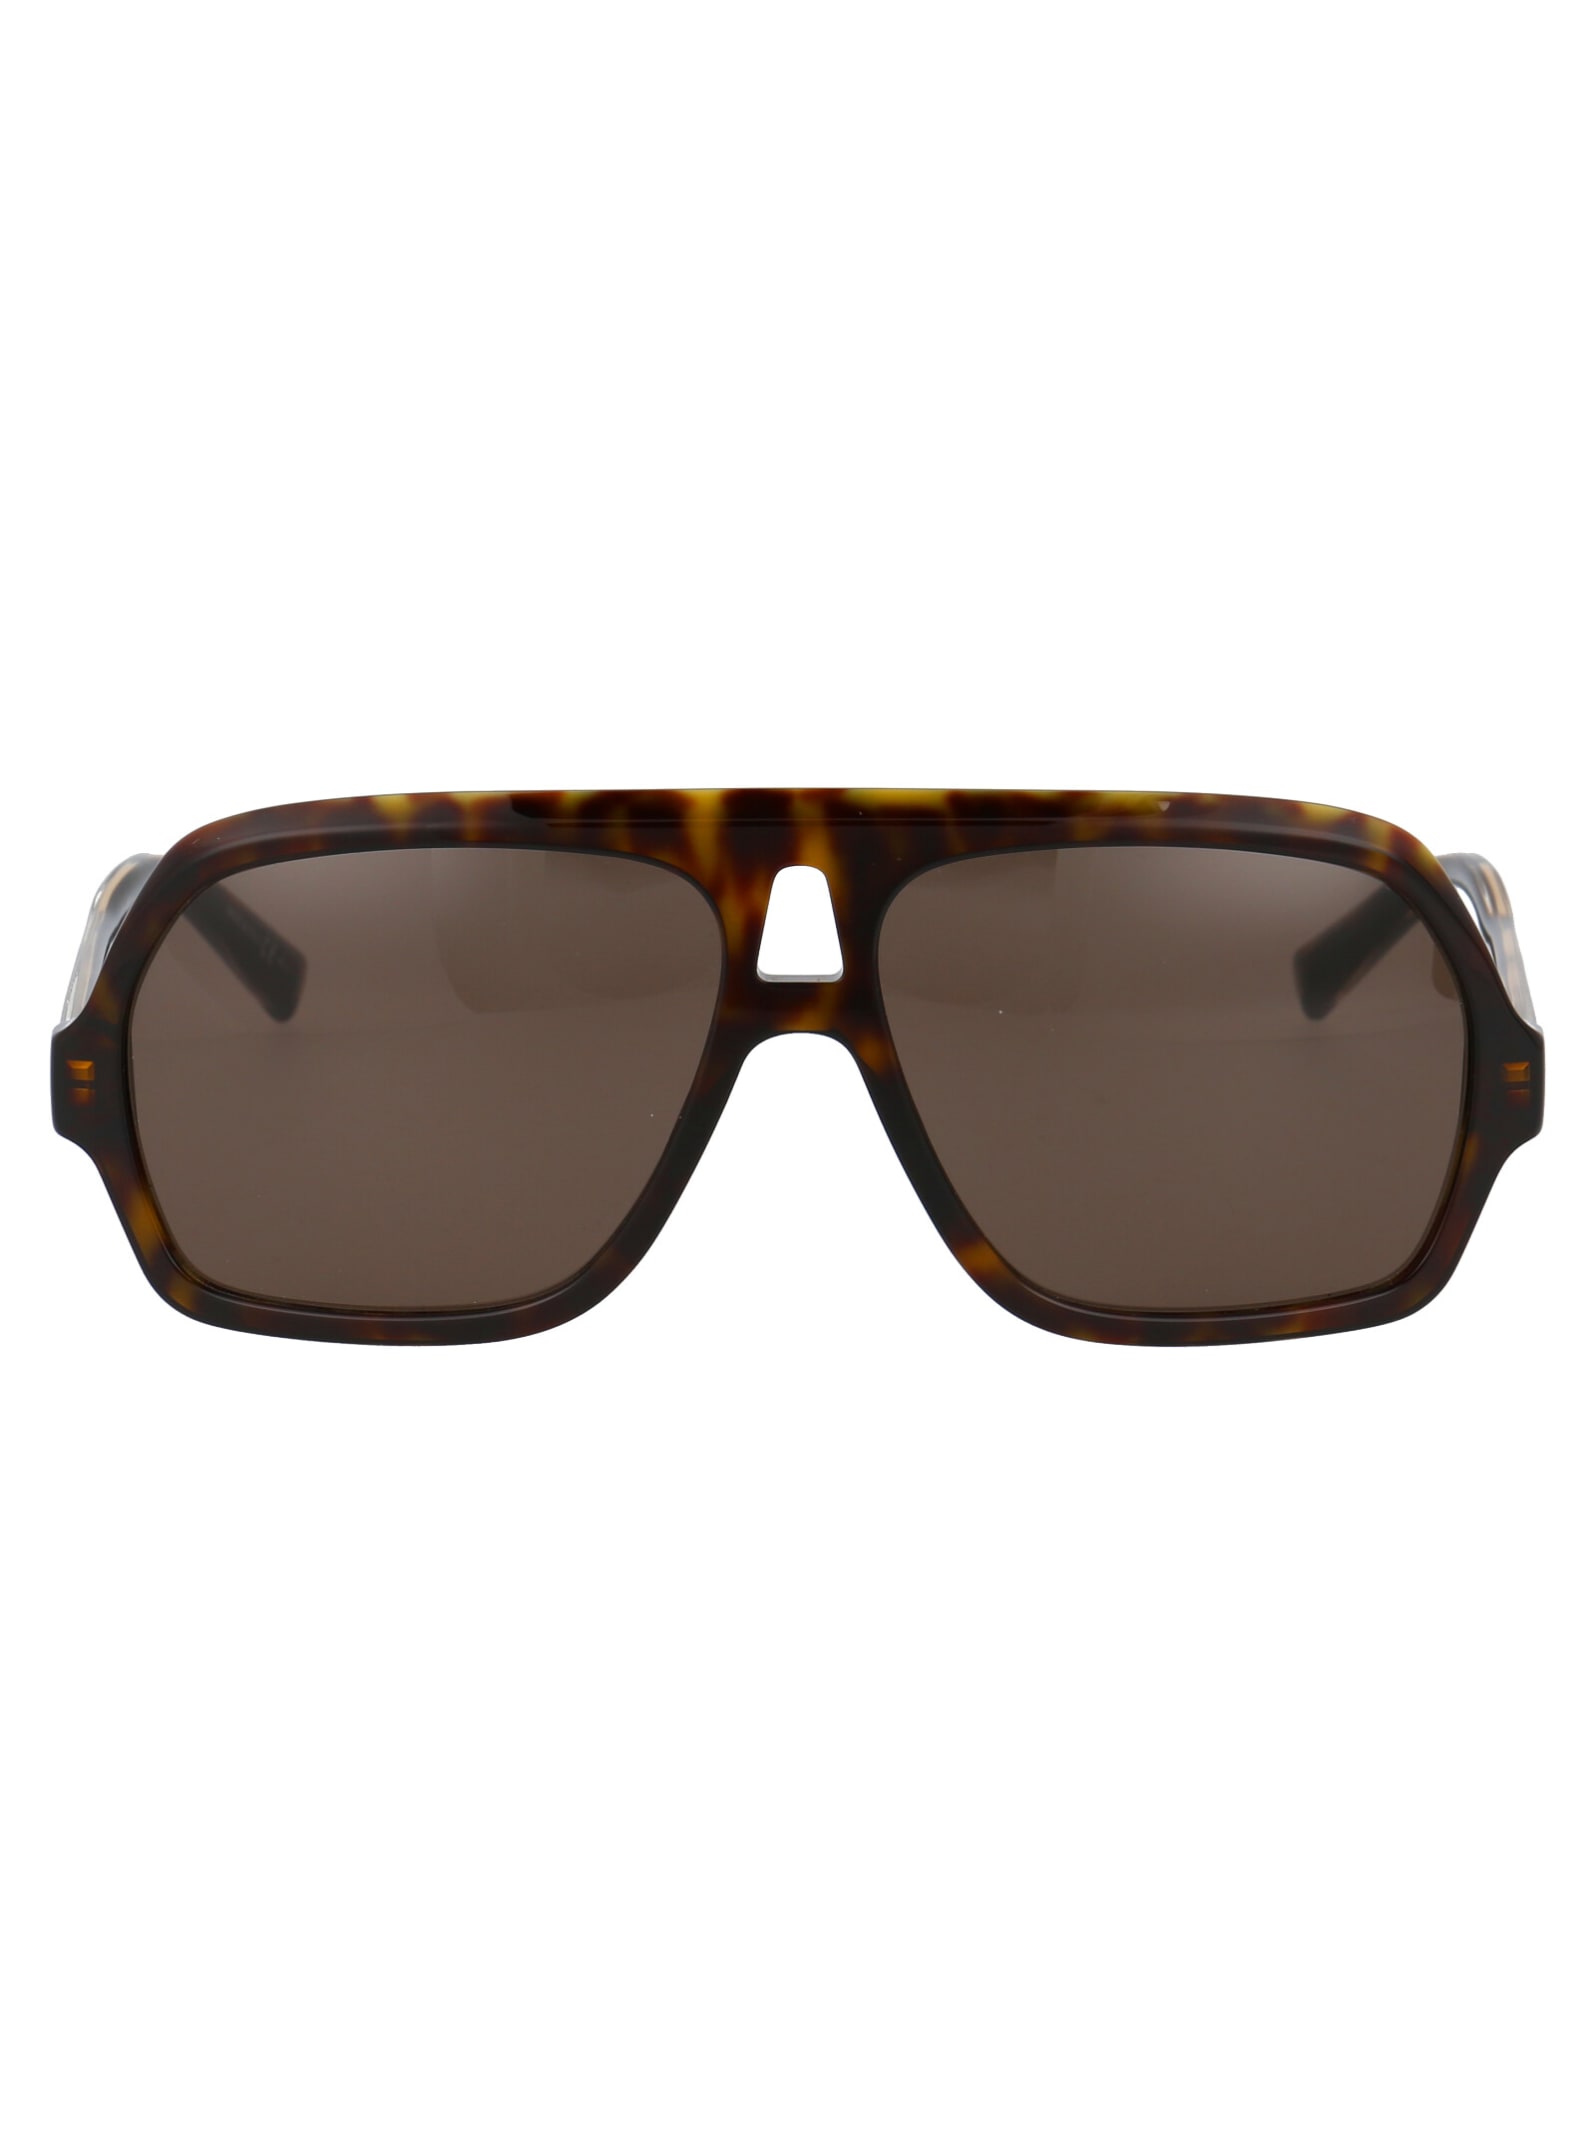 Givenchy Gv 7200/s Sunglasses